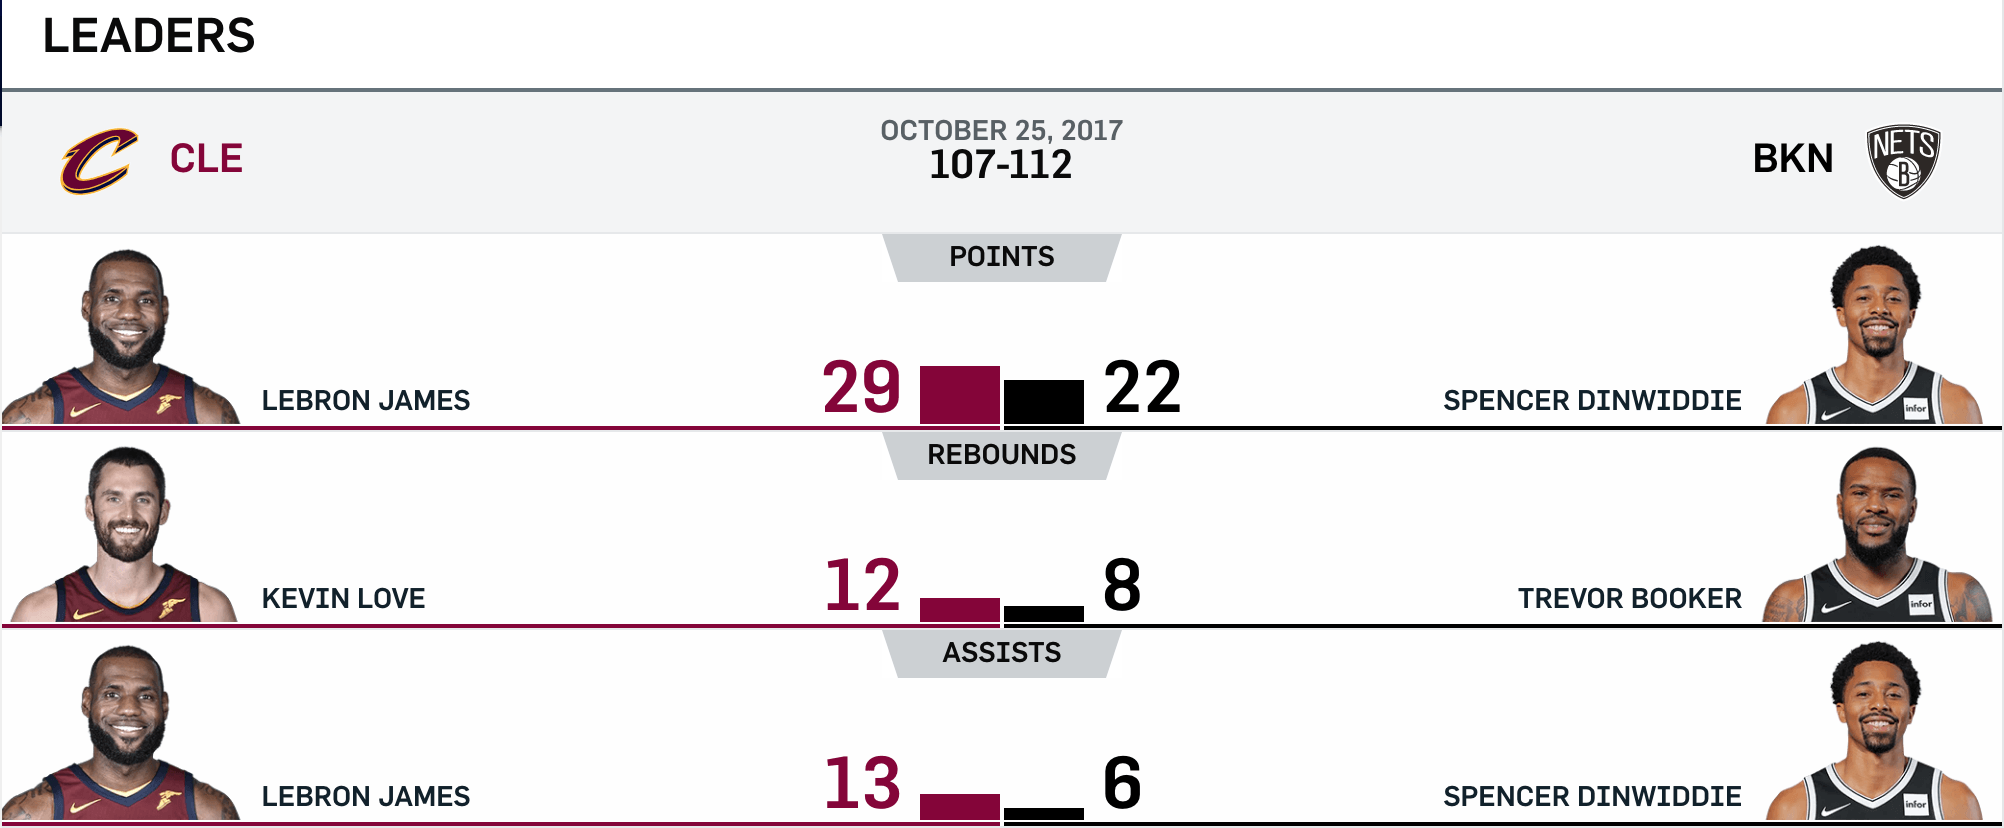 Nets vs Cavaliers 10-25-17 Leaders